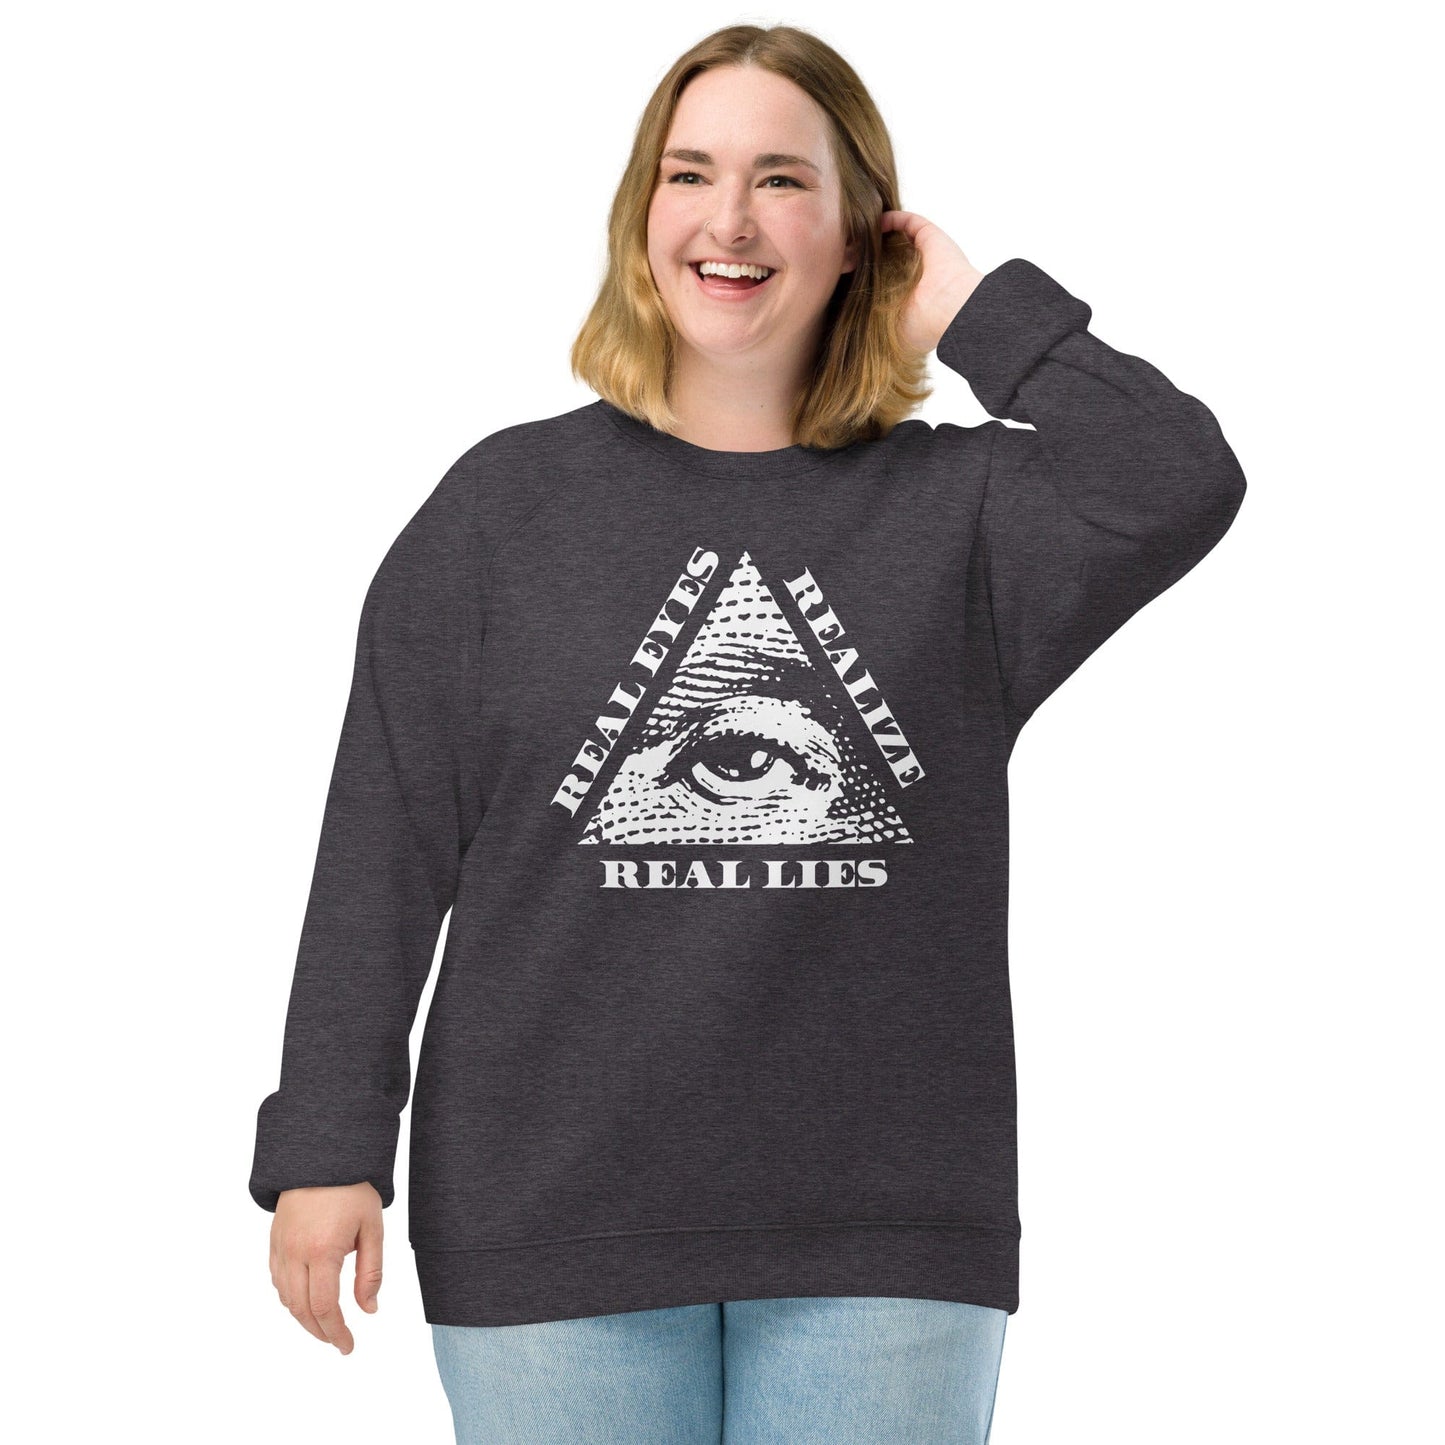 Real Eyes Realize Real Lies - All seeing eye - Eco Sweatshirt